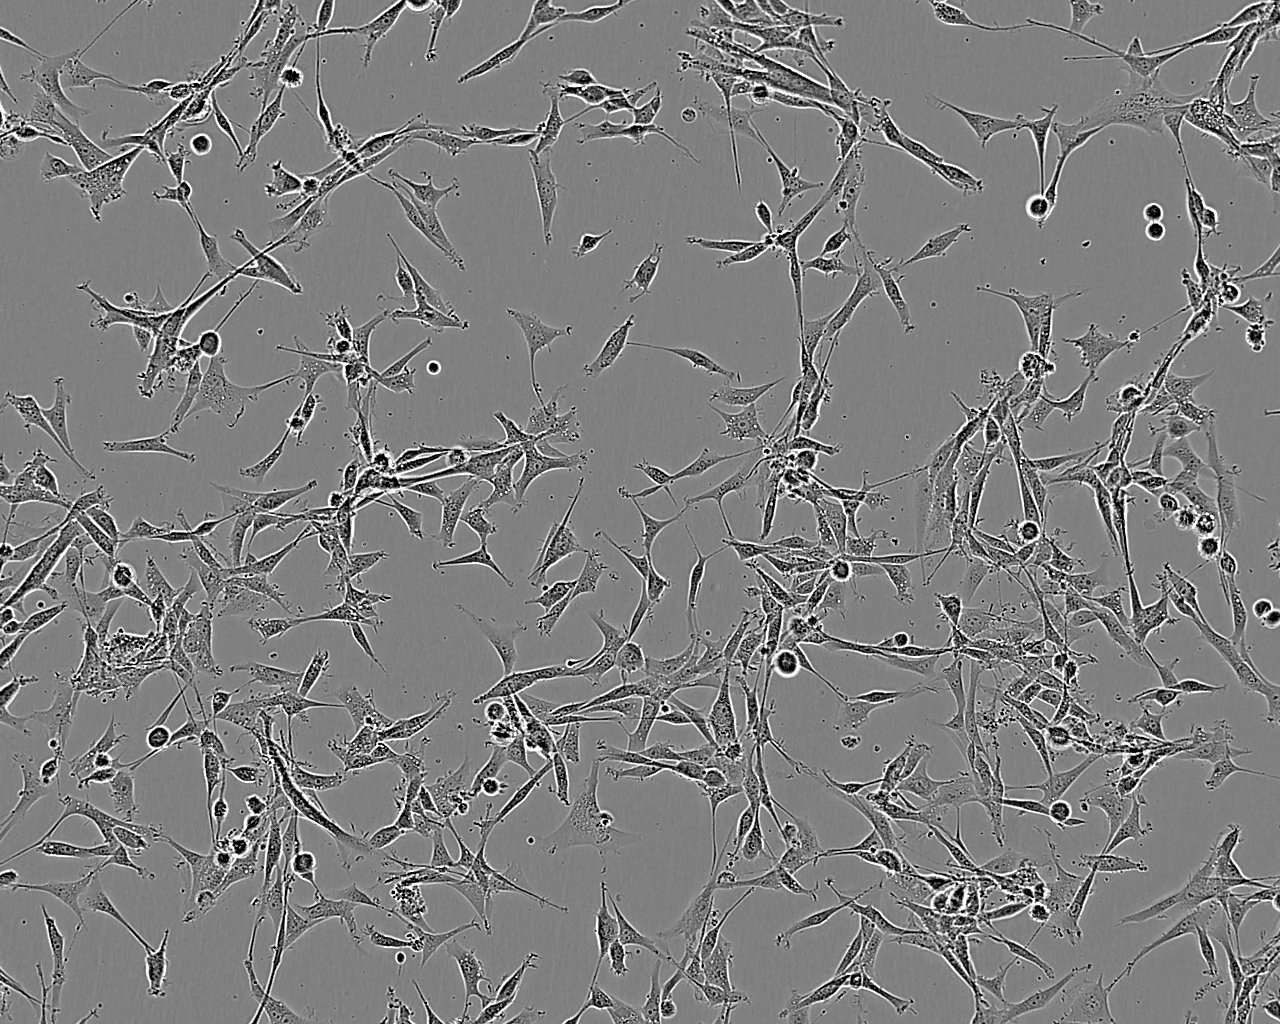 UO-31 epithelioid cells人肾癌细胞系,UO-31 epithelioid cells